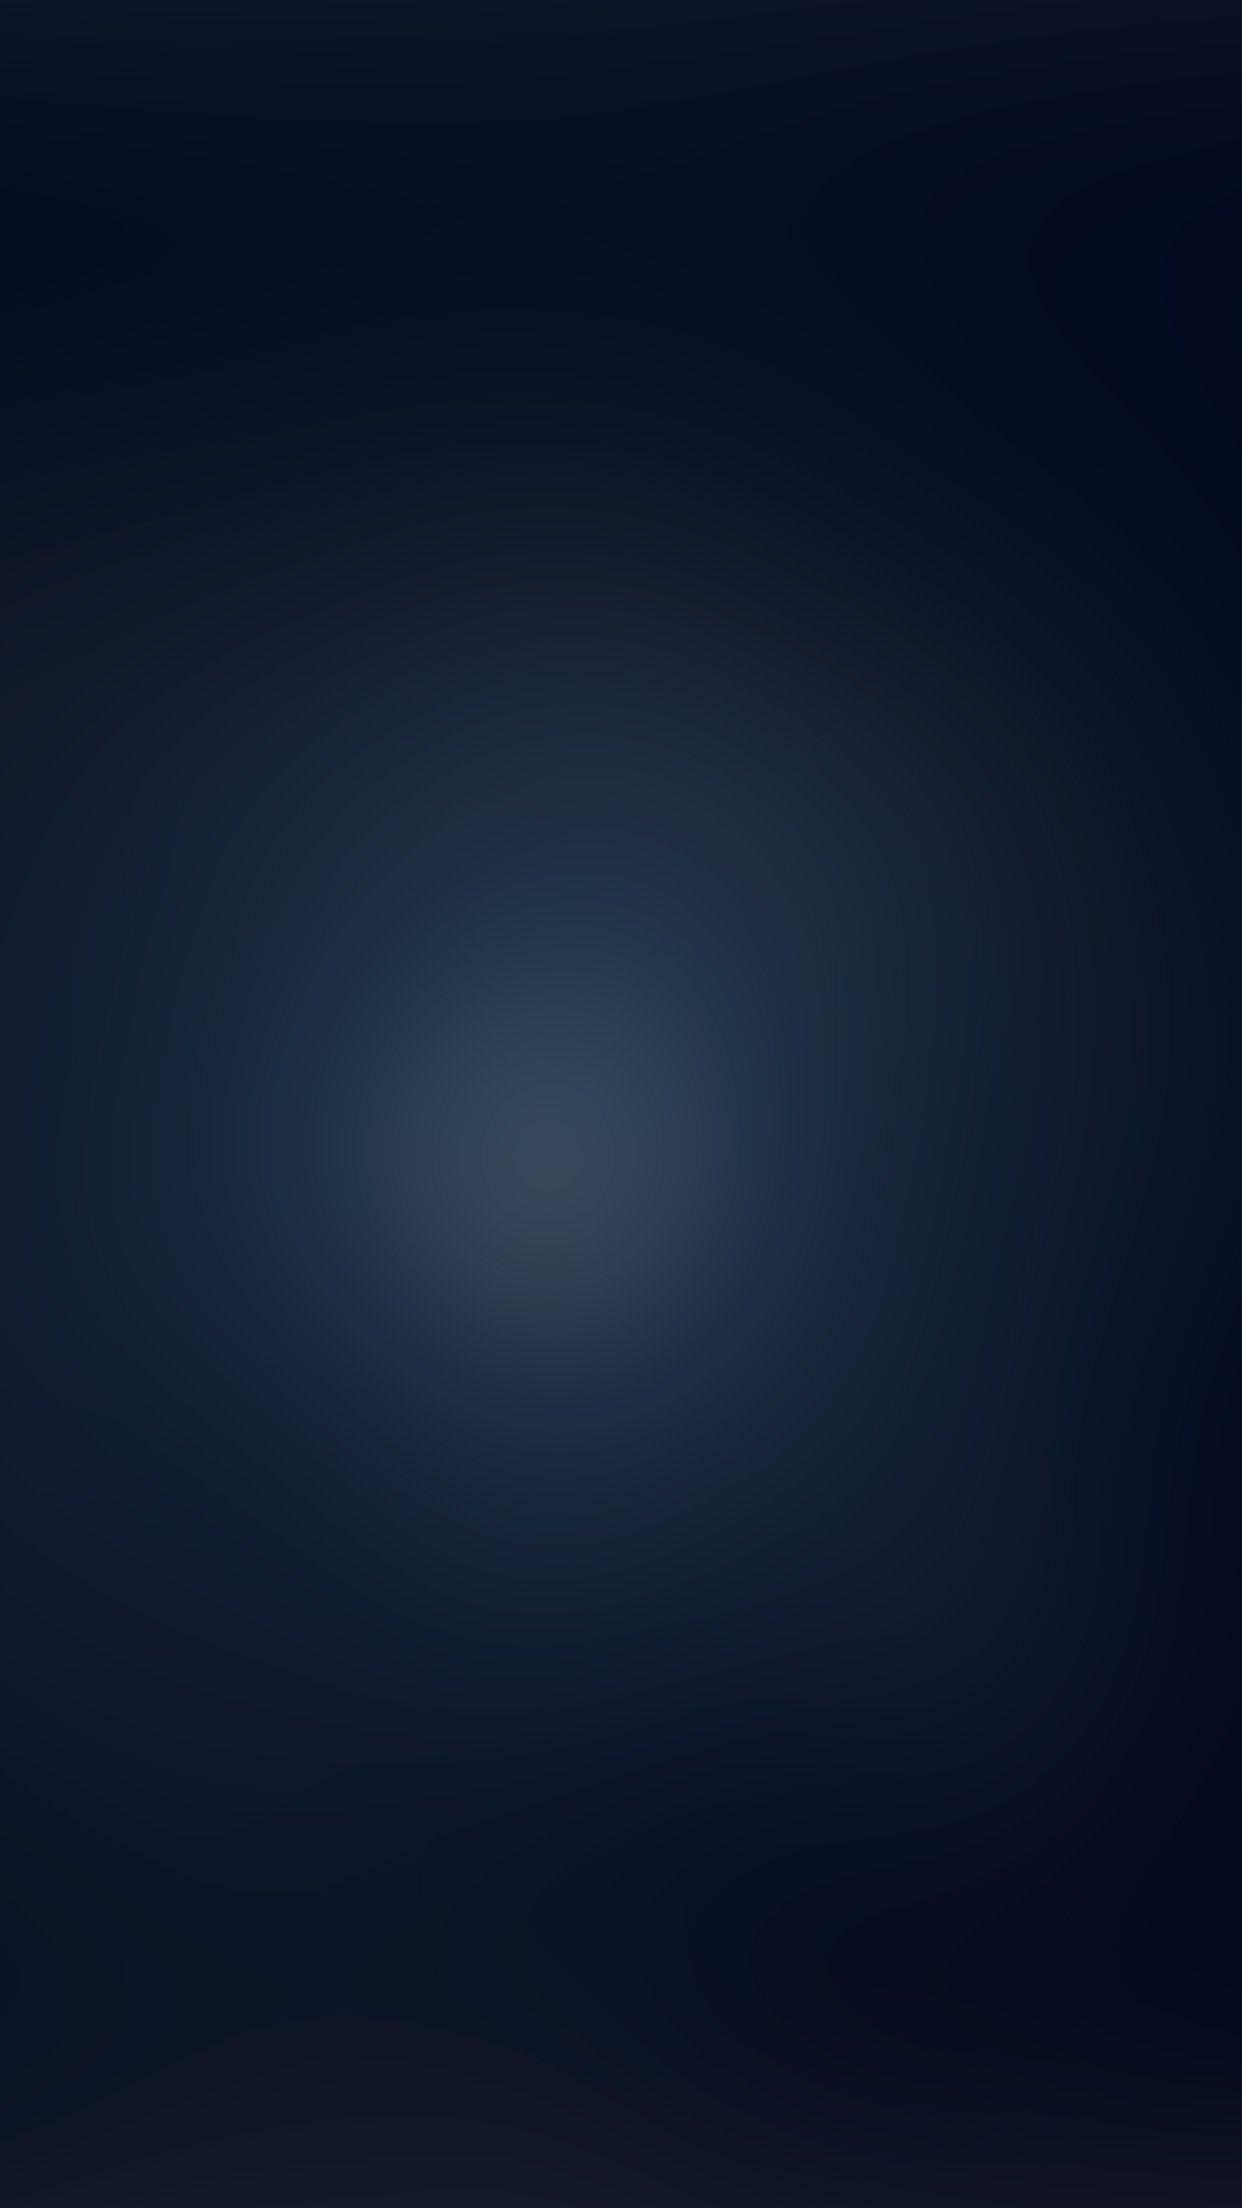 iPhone7 wallpaper. dark blue night